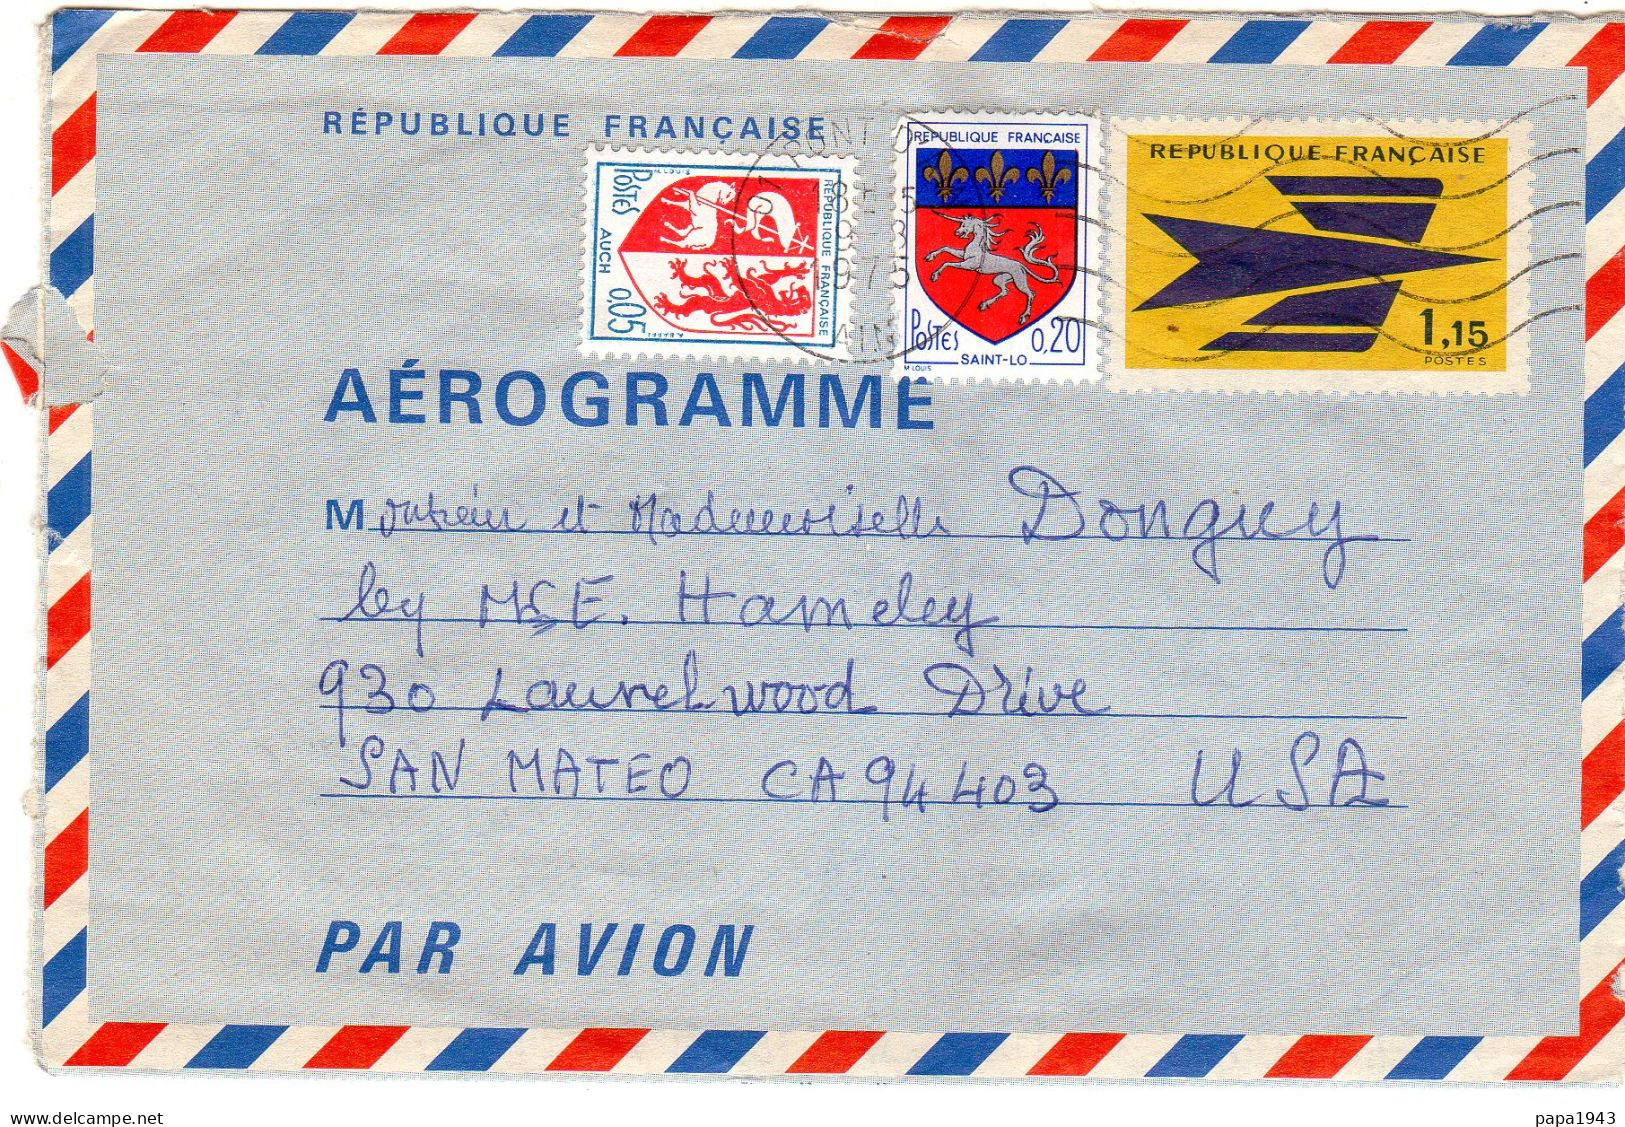 1975  AEROGRAMME  Timbres  Blasons Auch 0,05 + St LO 0,20 + 1,15 Envoyée à SAN MATEO U S A - Aerogramme